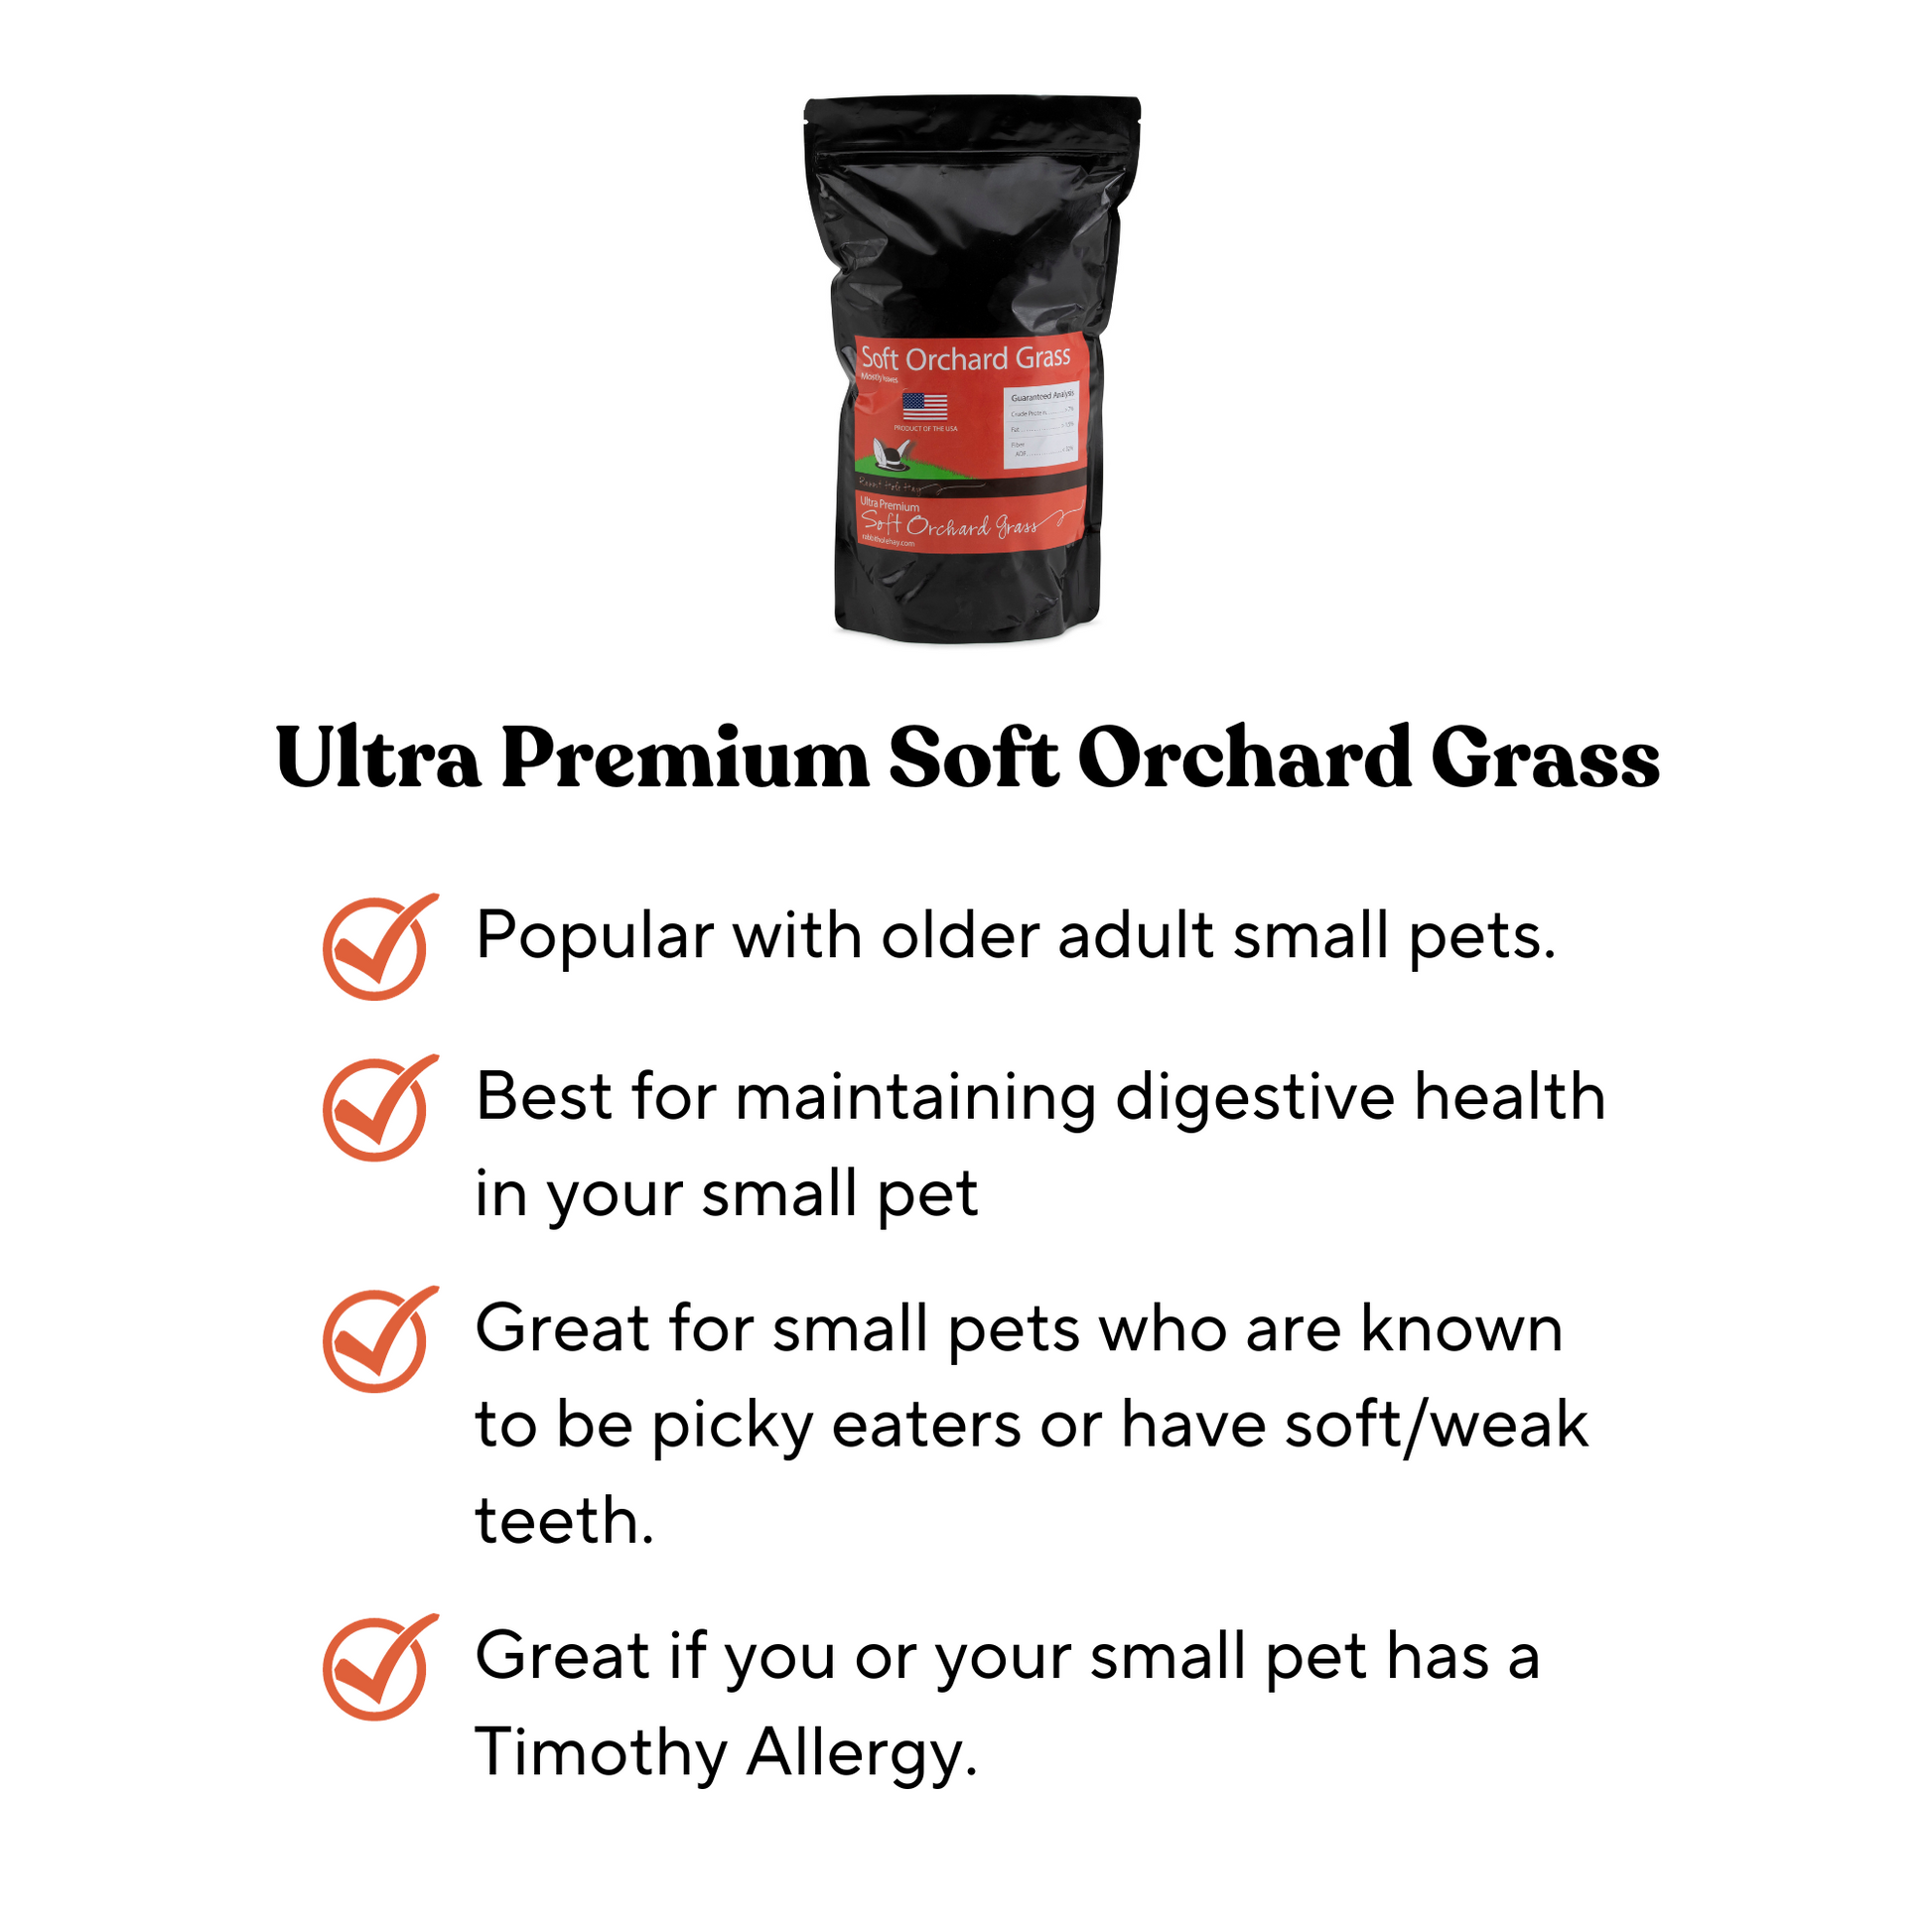 Ultra Premium Soft Orchard Grass Benefits